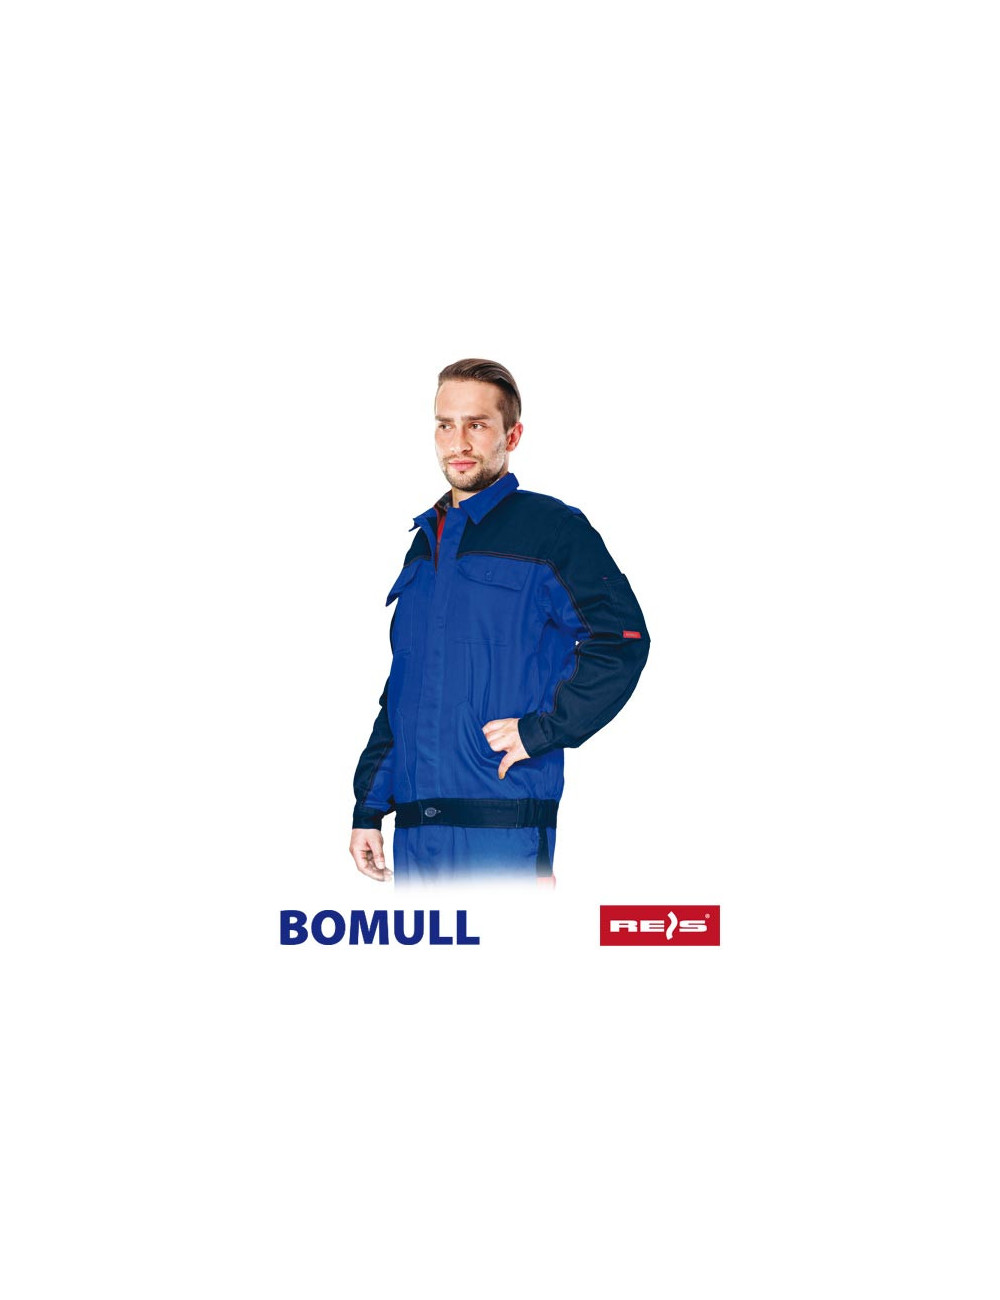 Bomull-j ng schützendes Sweatshirt blau-marineblau Reis